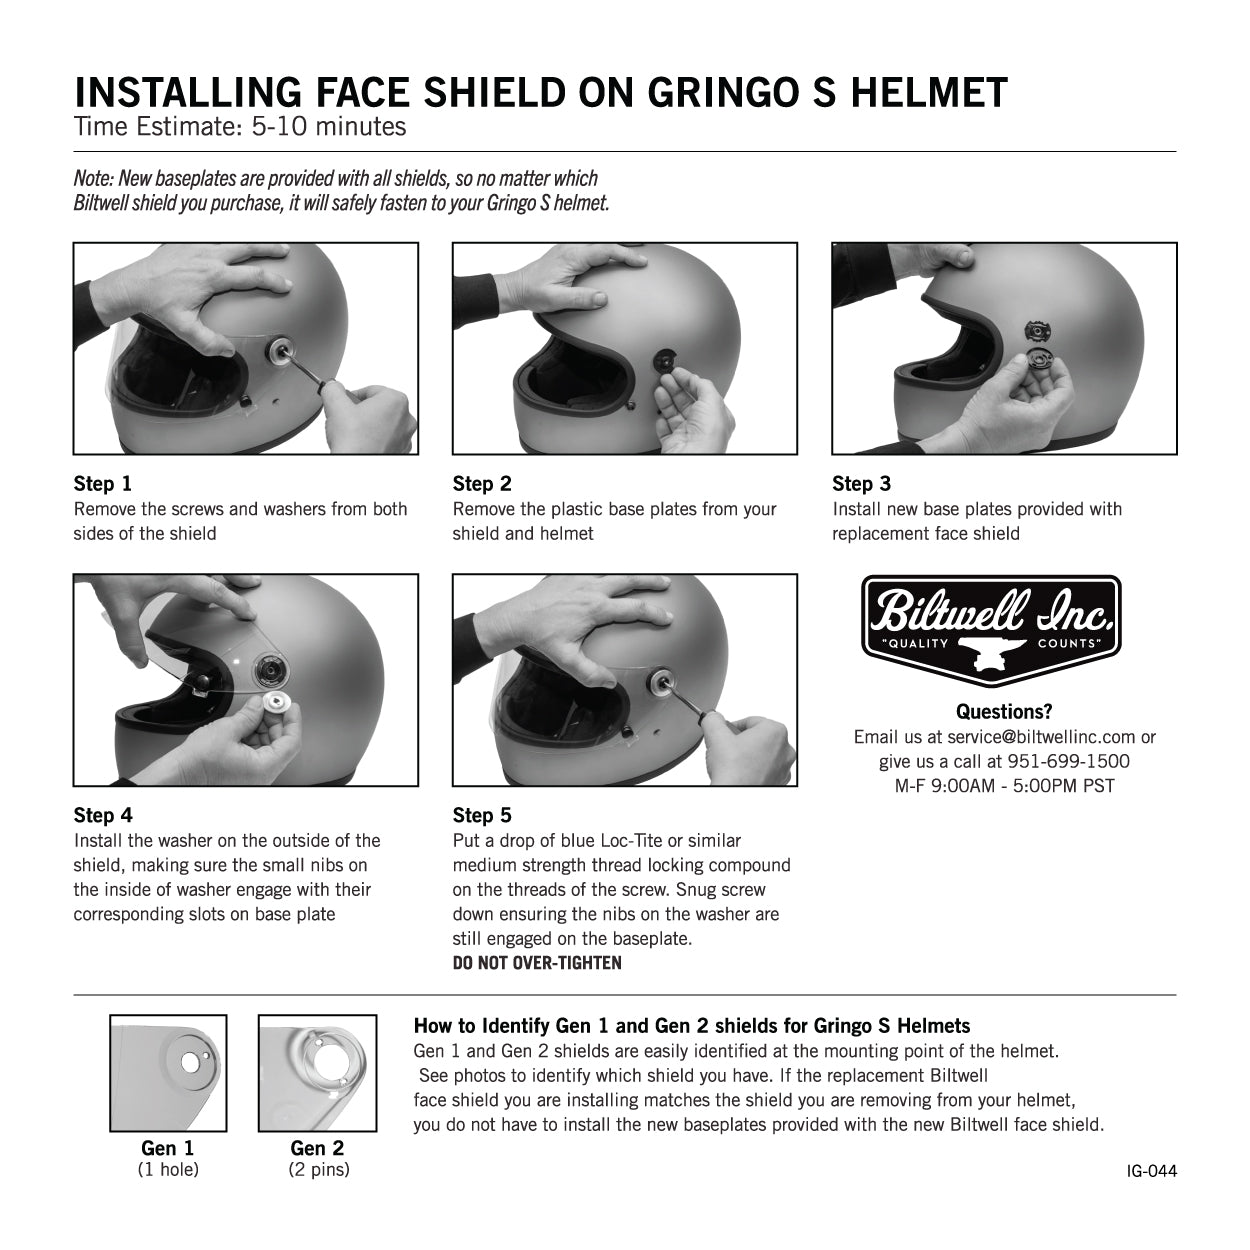 CLOSEOUT Gringo S ECE R22.05 Helmet - Gloss Black Spectrum